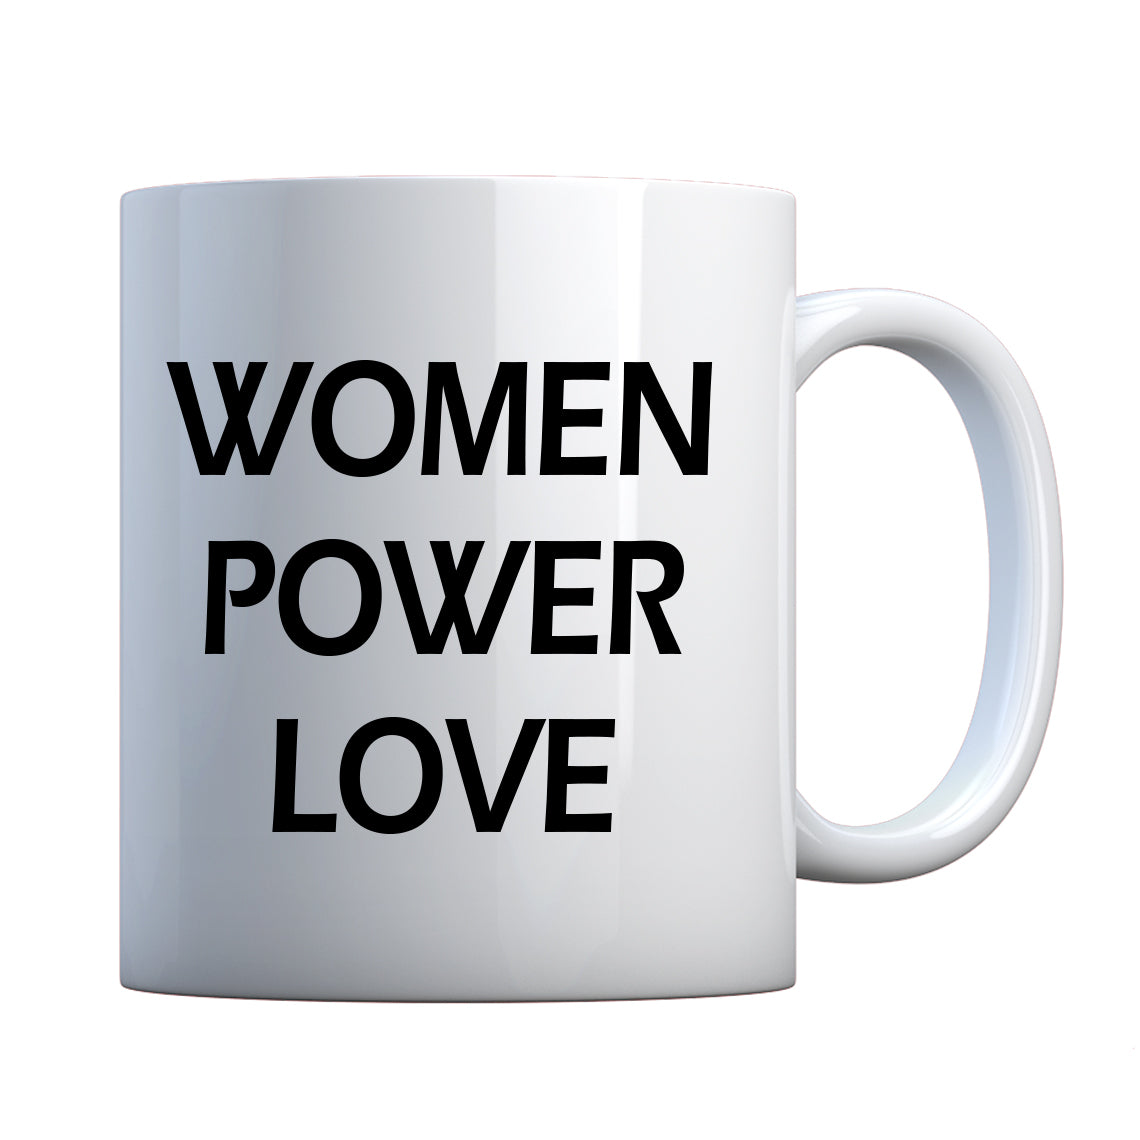 Mug Women Power Love  Ceramic Gift Mug